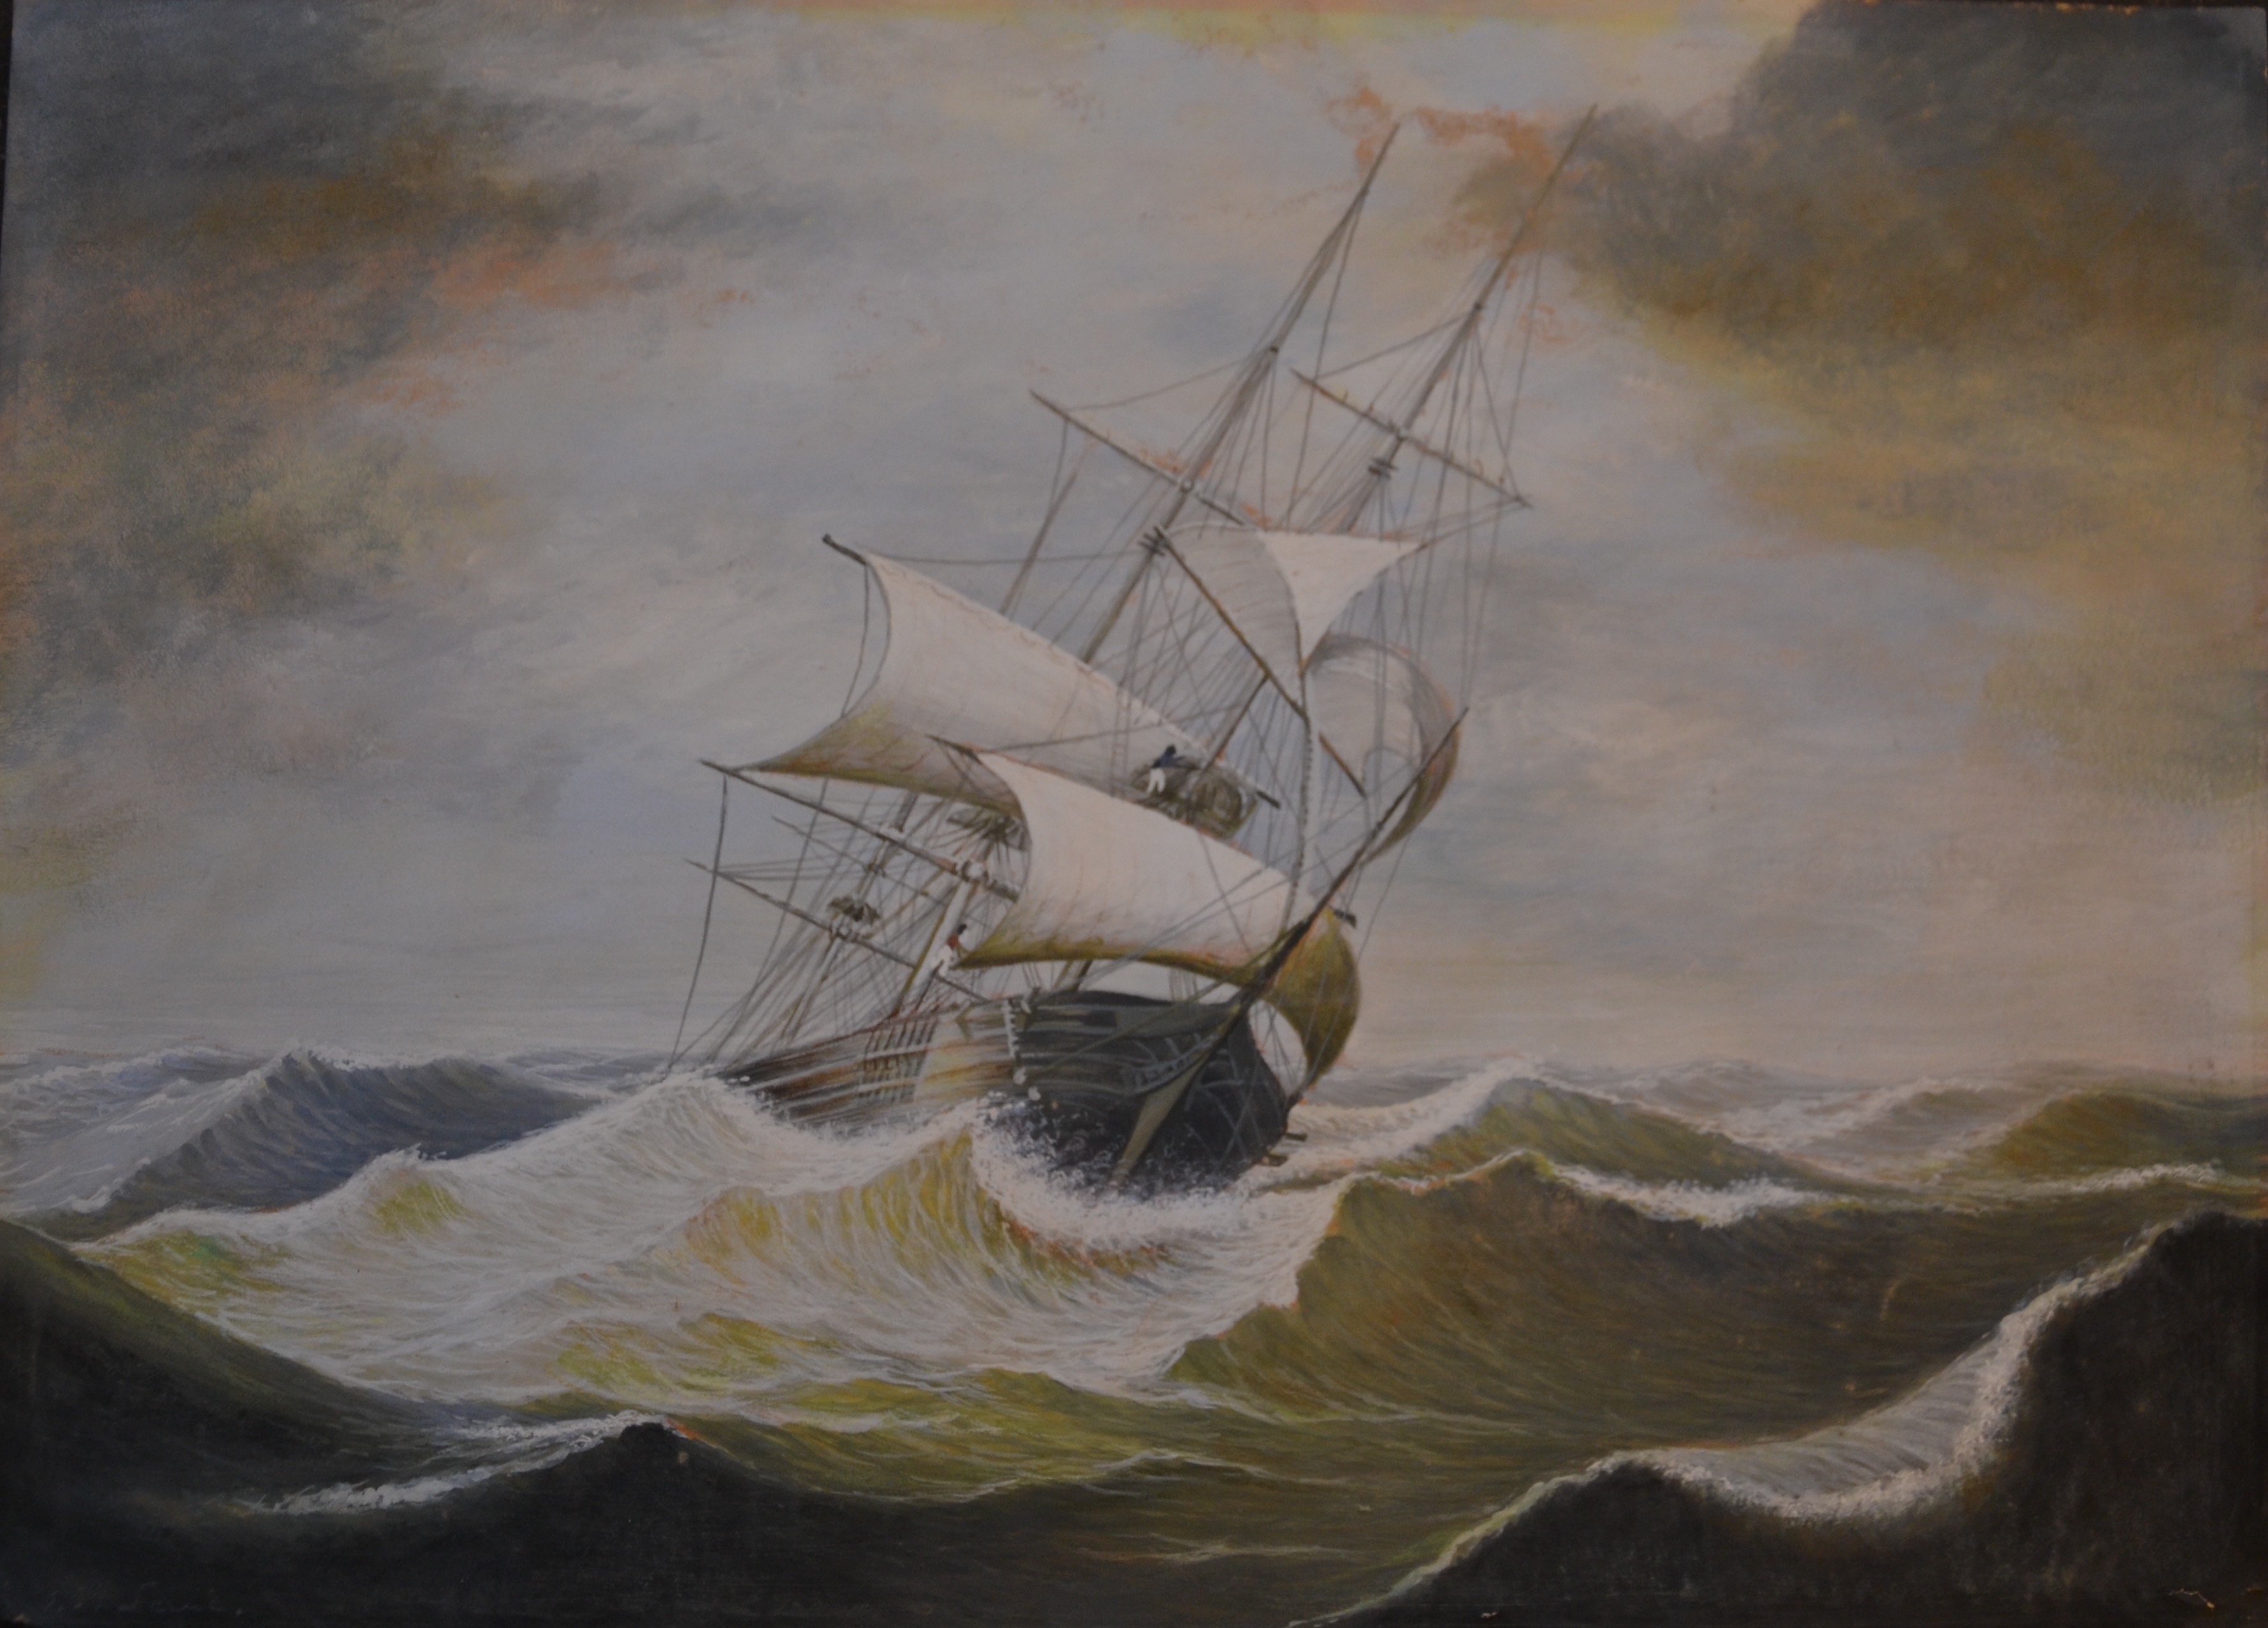 A watercolor of a ship in rough seas